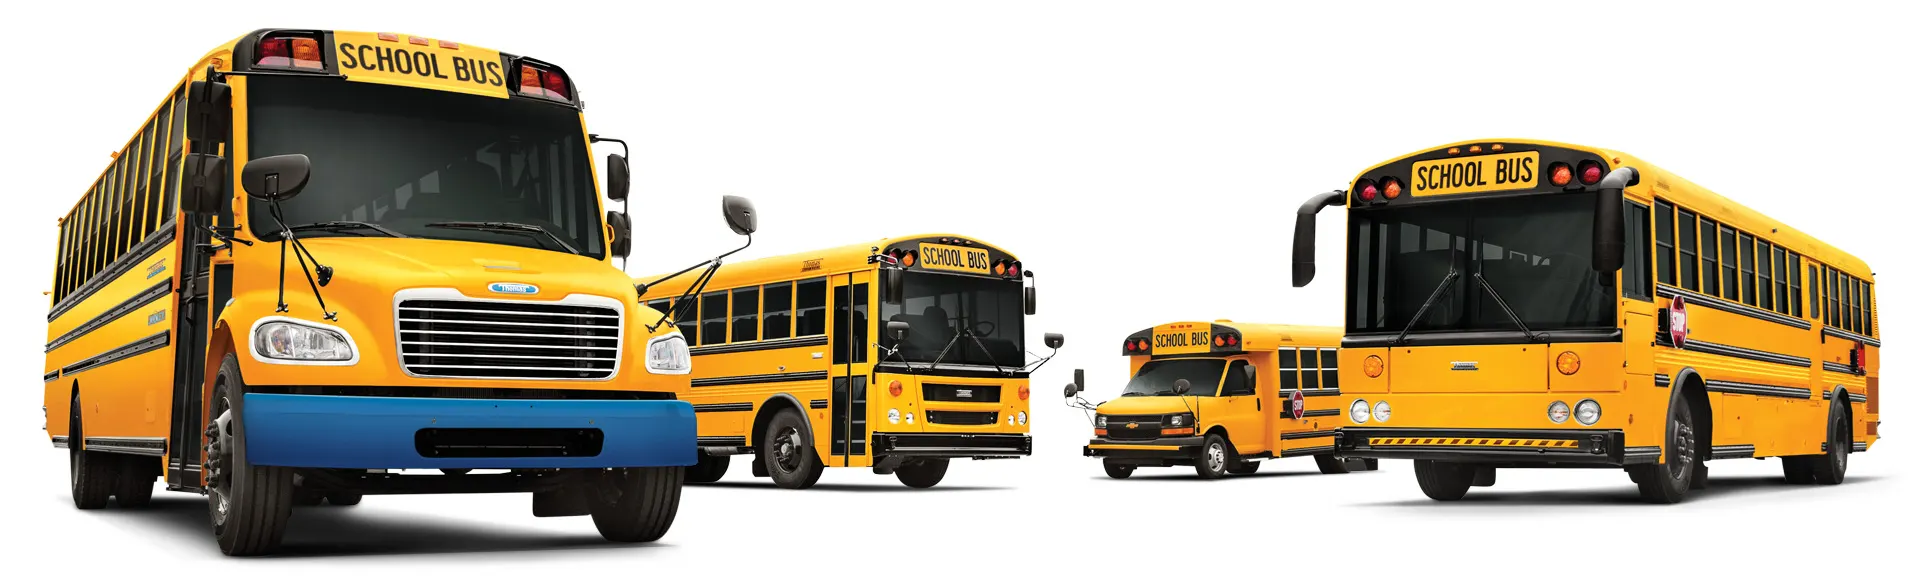 Display of Thomas buses on white background